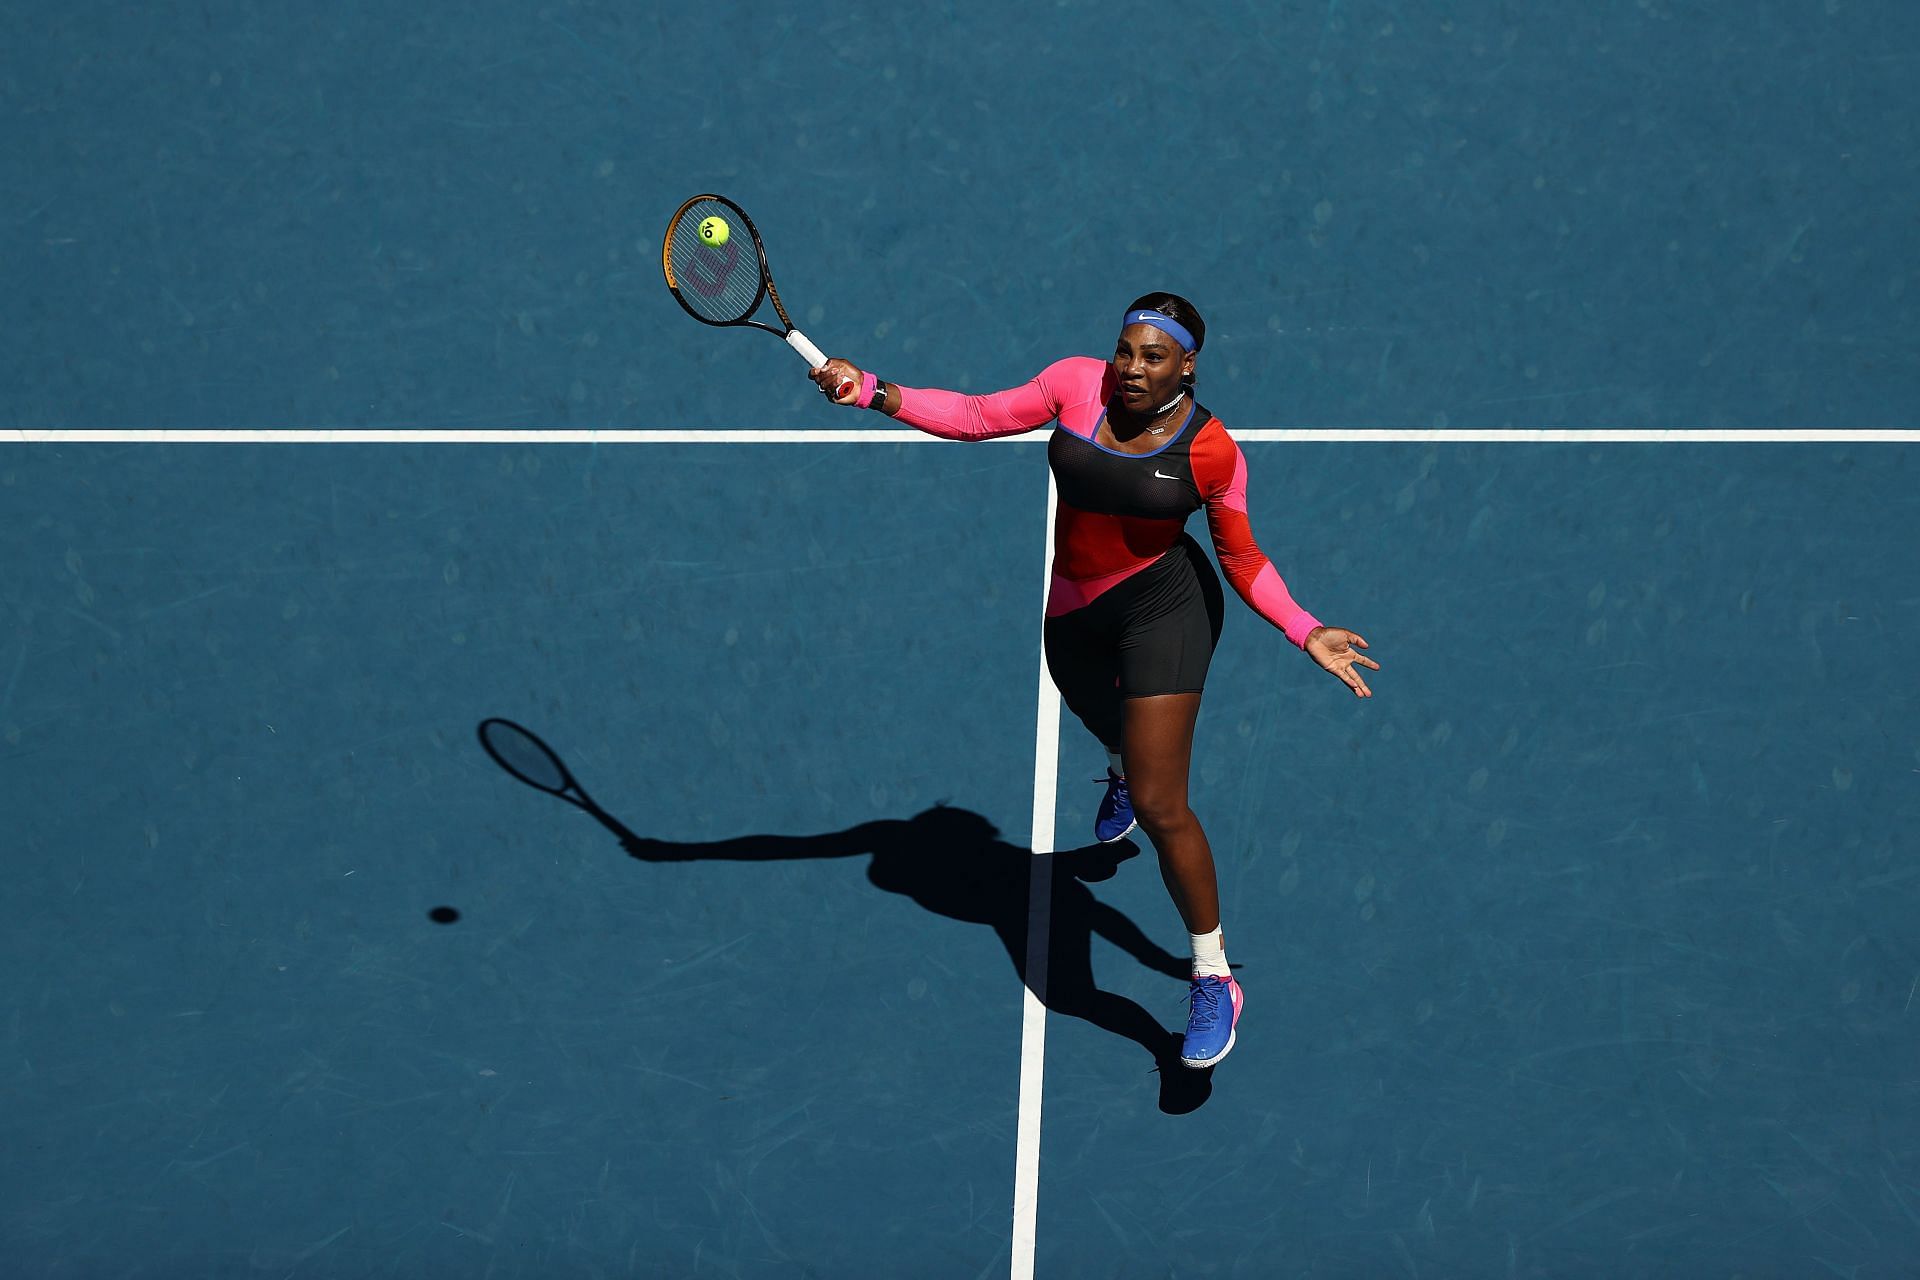 Serena Williams in action against Naomi Osaka at the 2021 Australian Open.